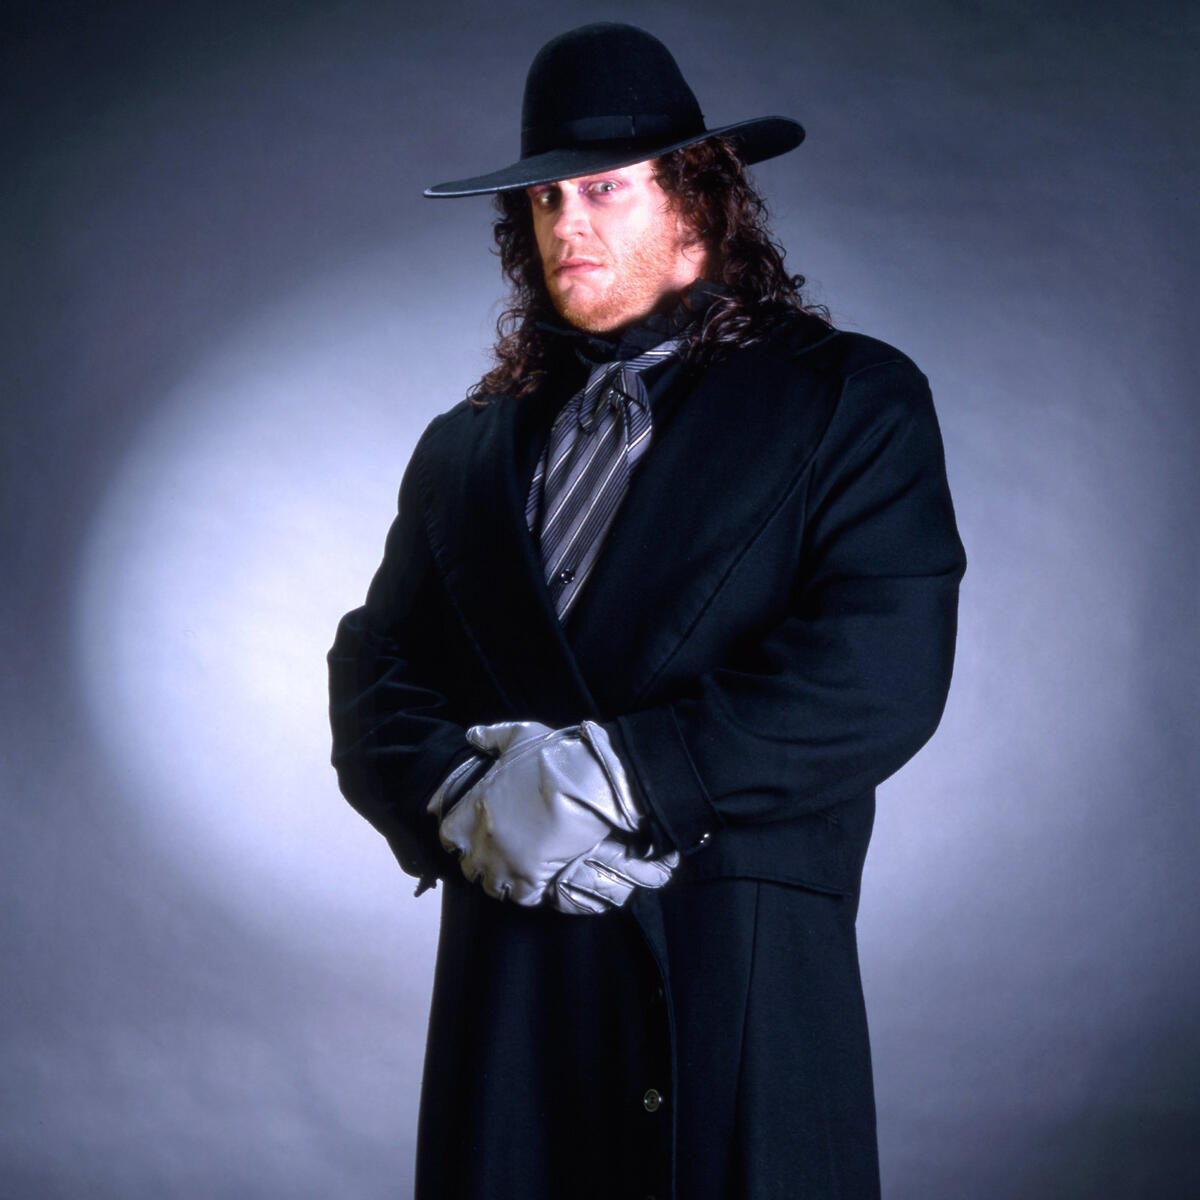 The Undertaker (debuted in 1990)